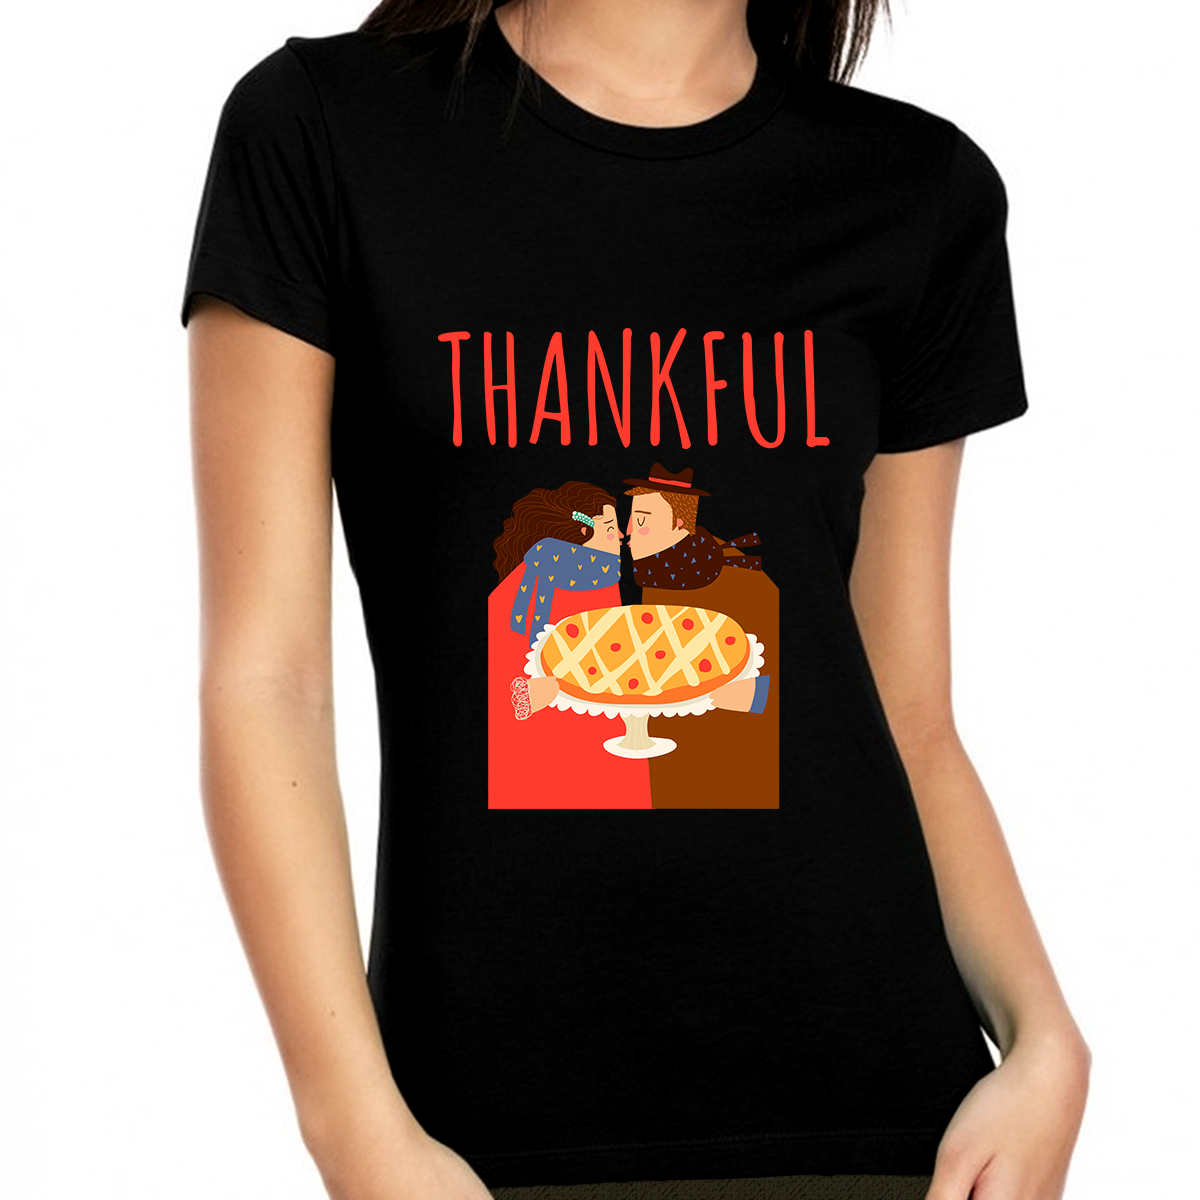 Thanksgiving Shirts for Women Cute Thankful Shirts for Women Cute Fall Shirts Womens Thanksgiving Shirt